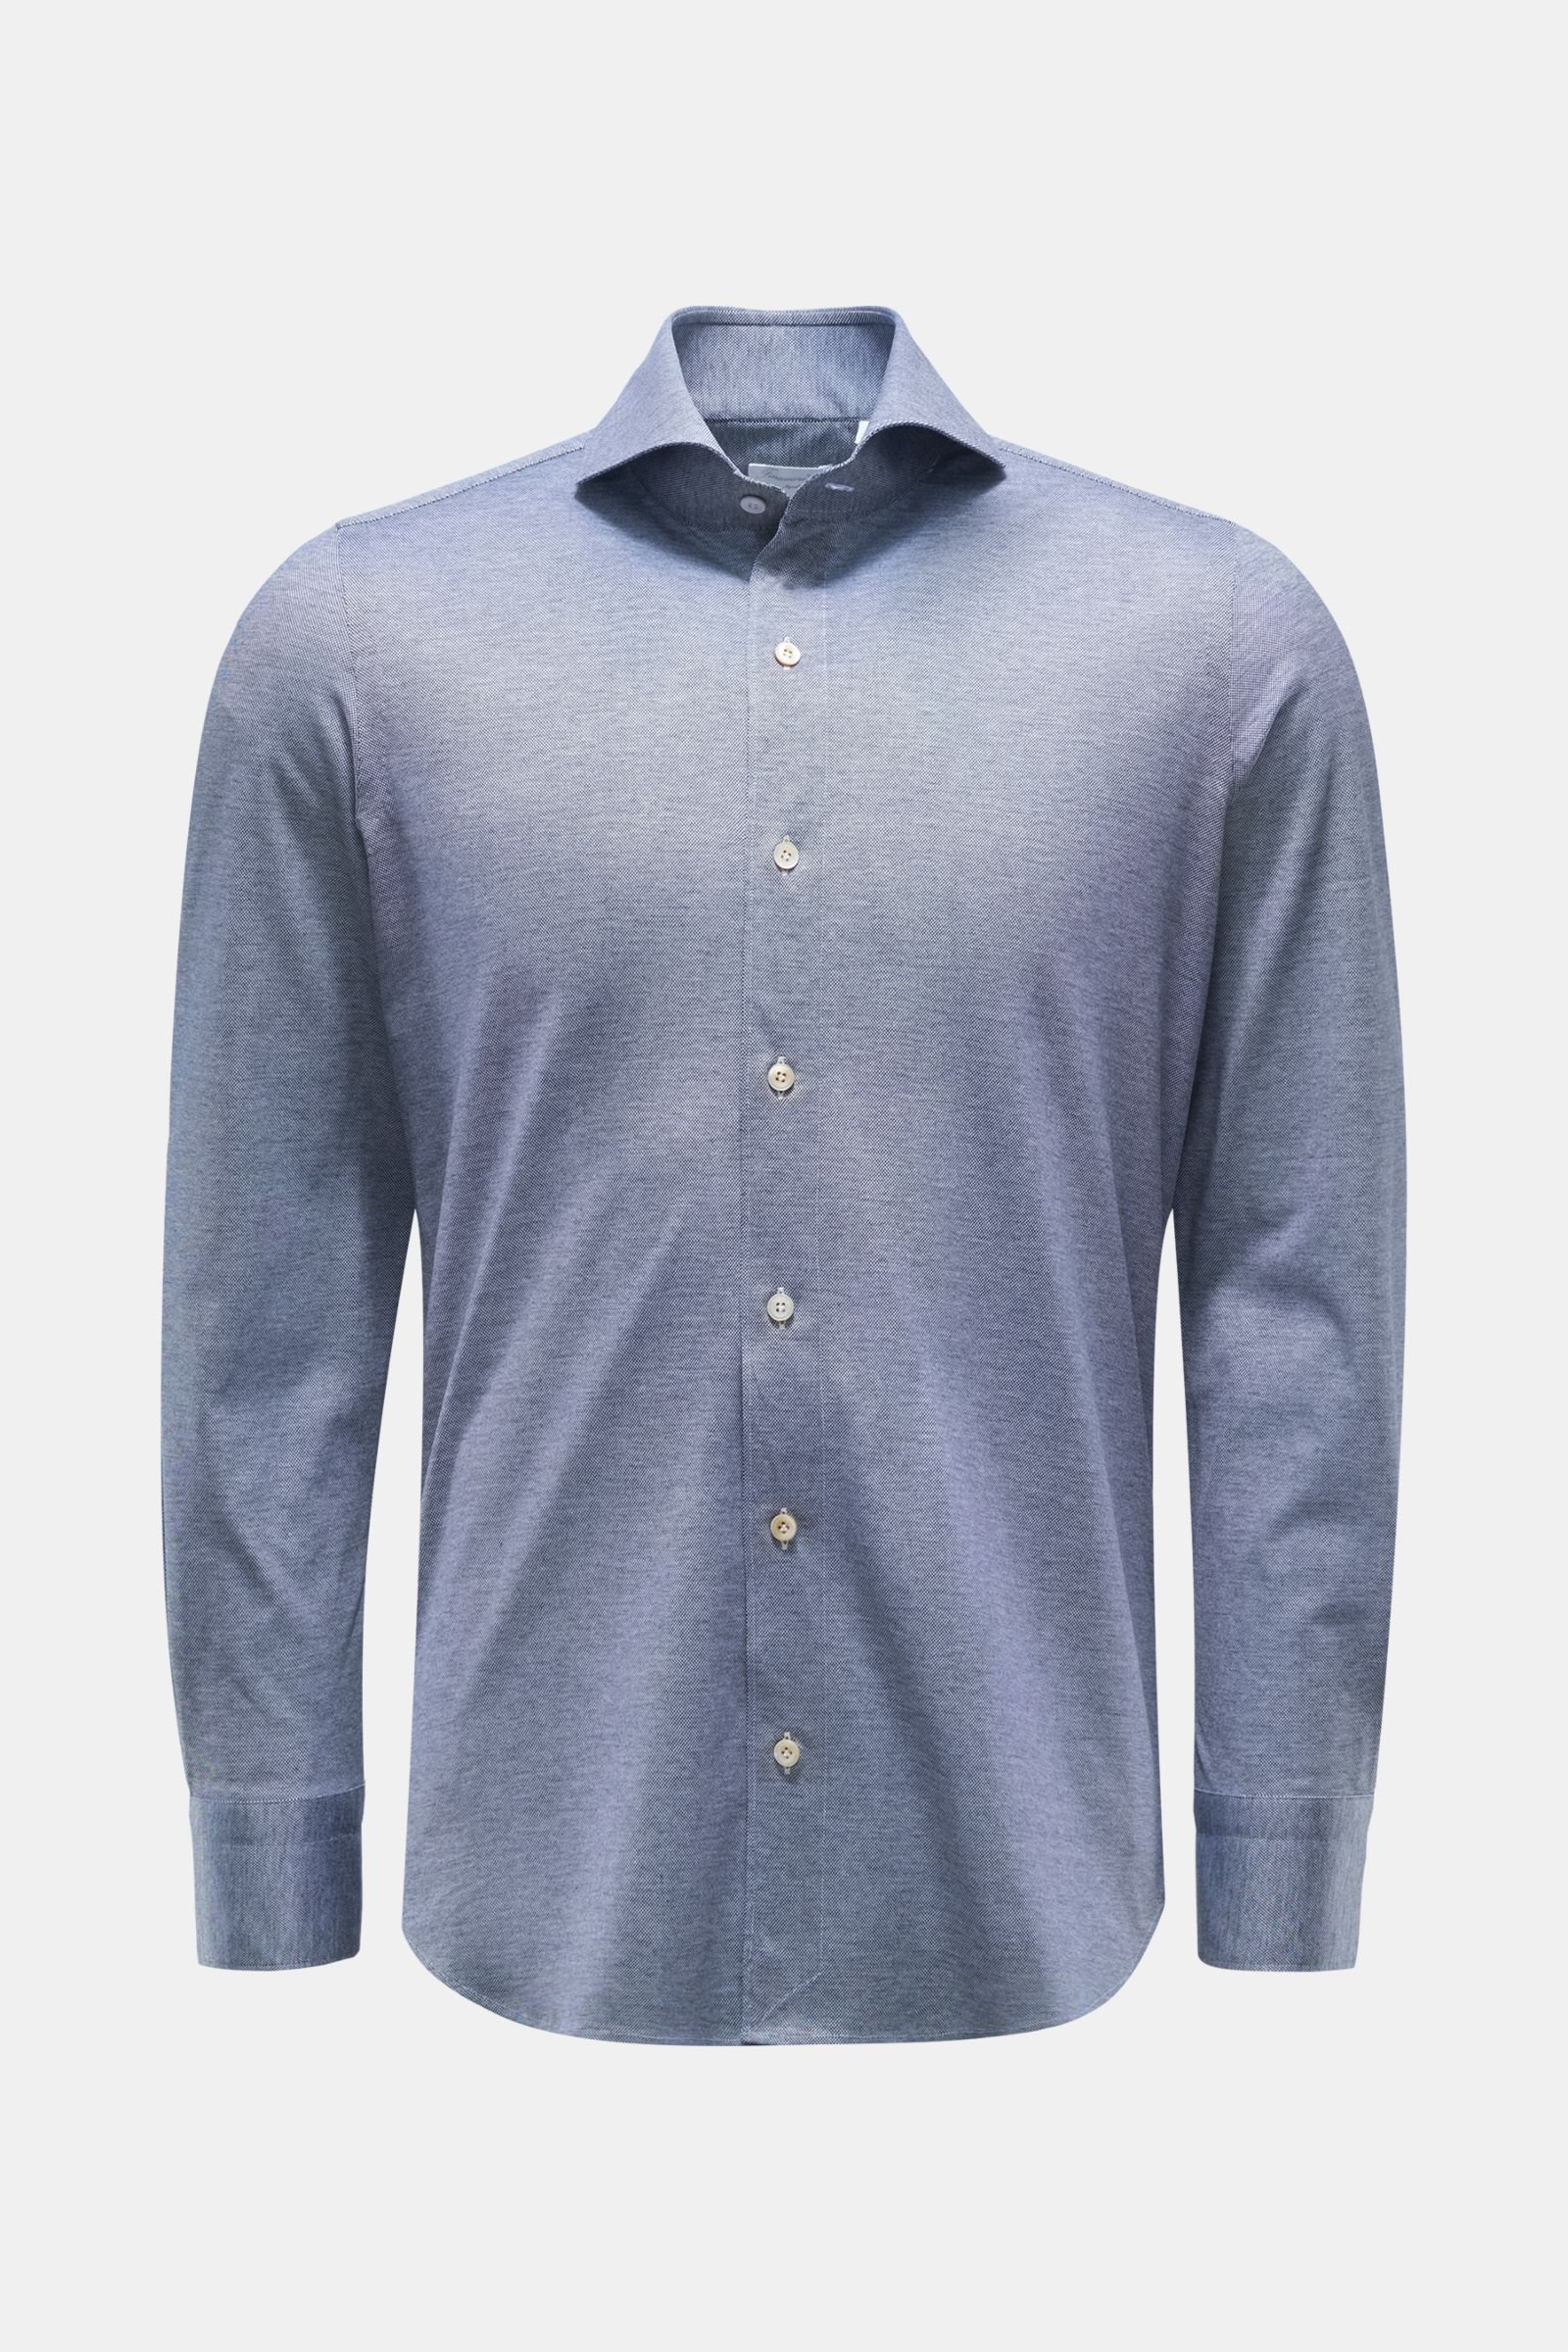 Jersey shirt 'Sergio Toronto' shark collar grey-blue